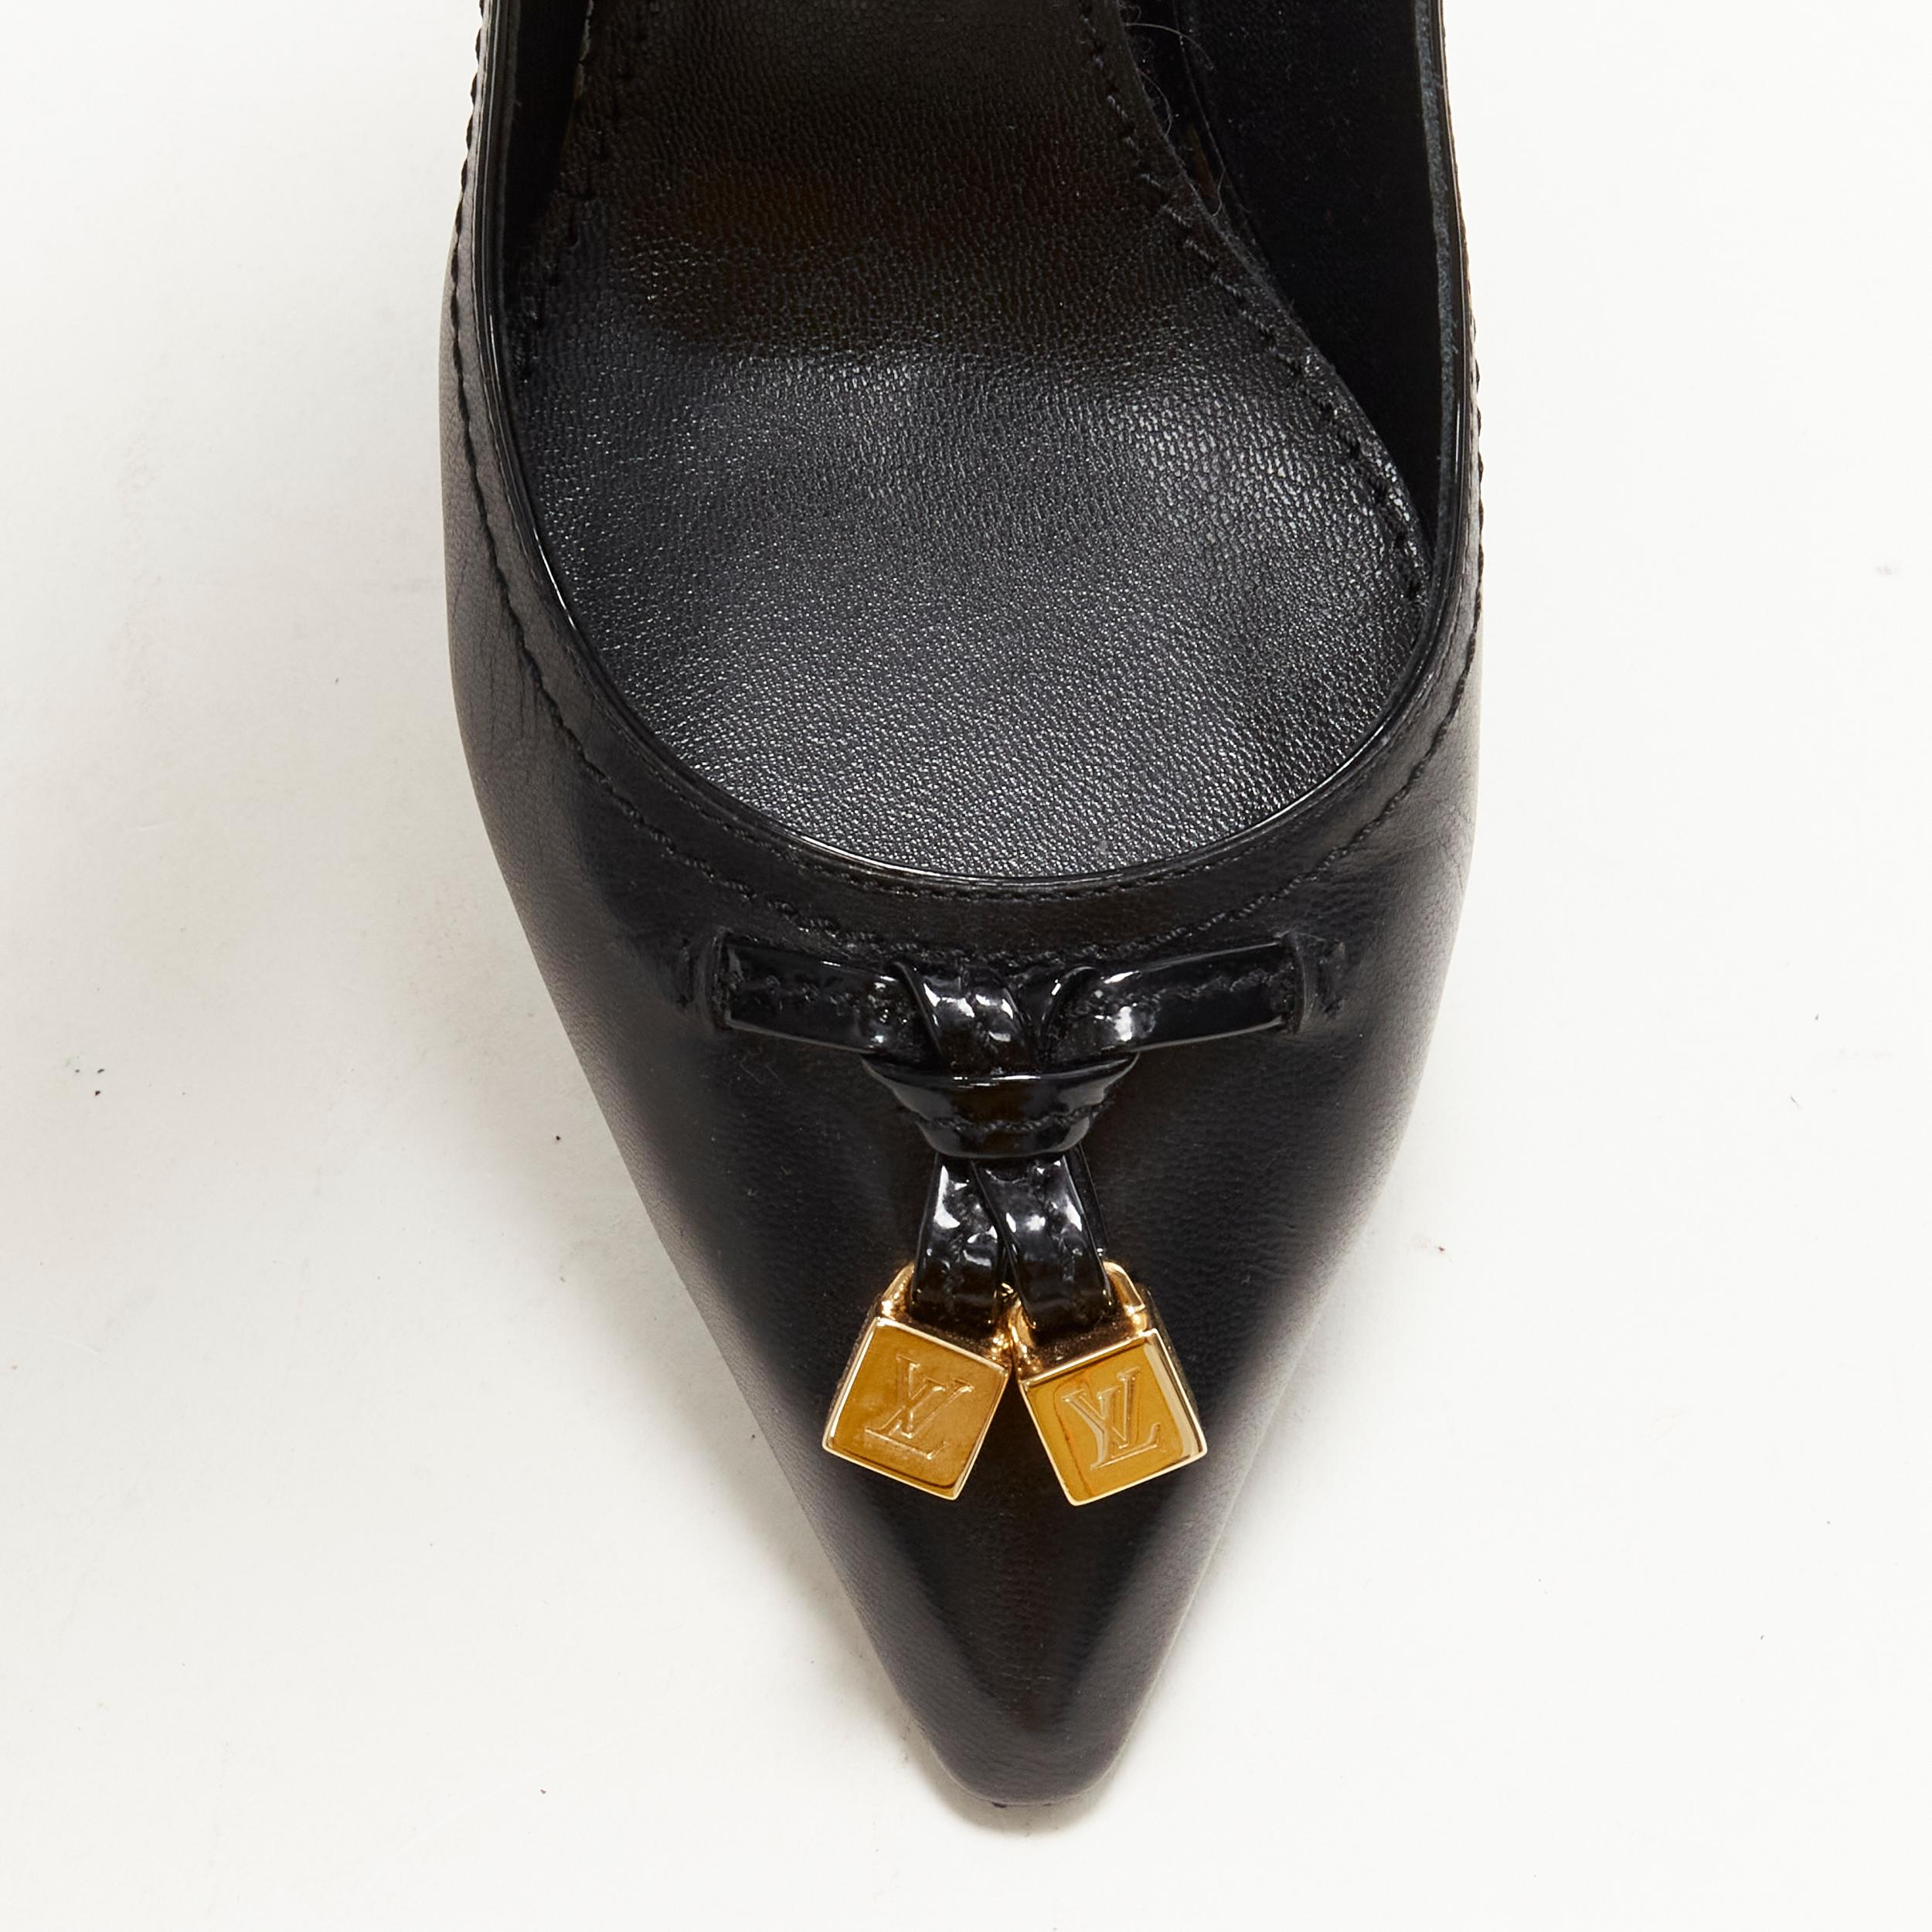 LOUIS VUITTON gold LV dice charm black leather mid heel pump EU36.5 For Sale 1